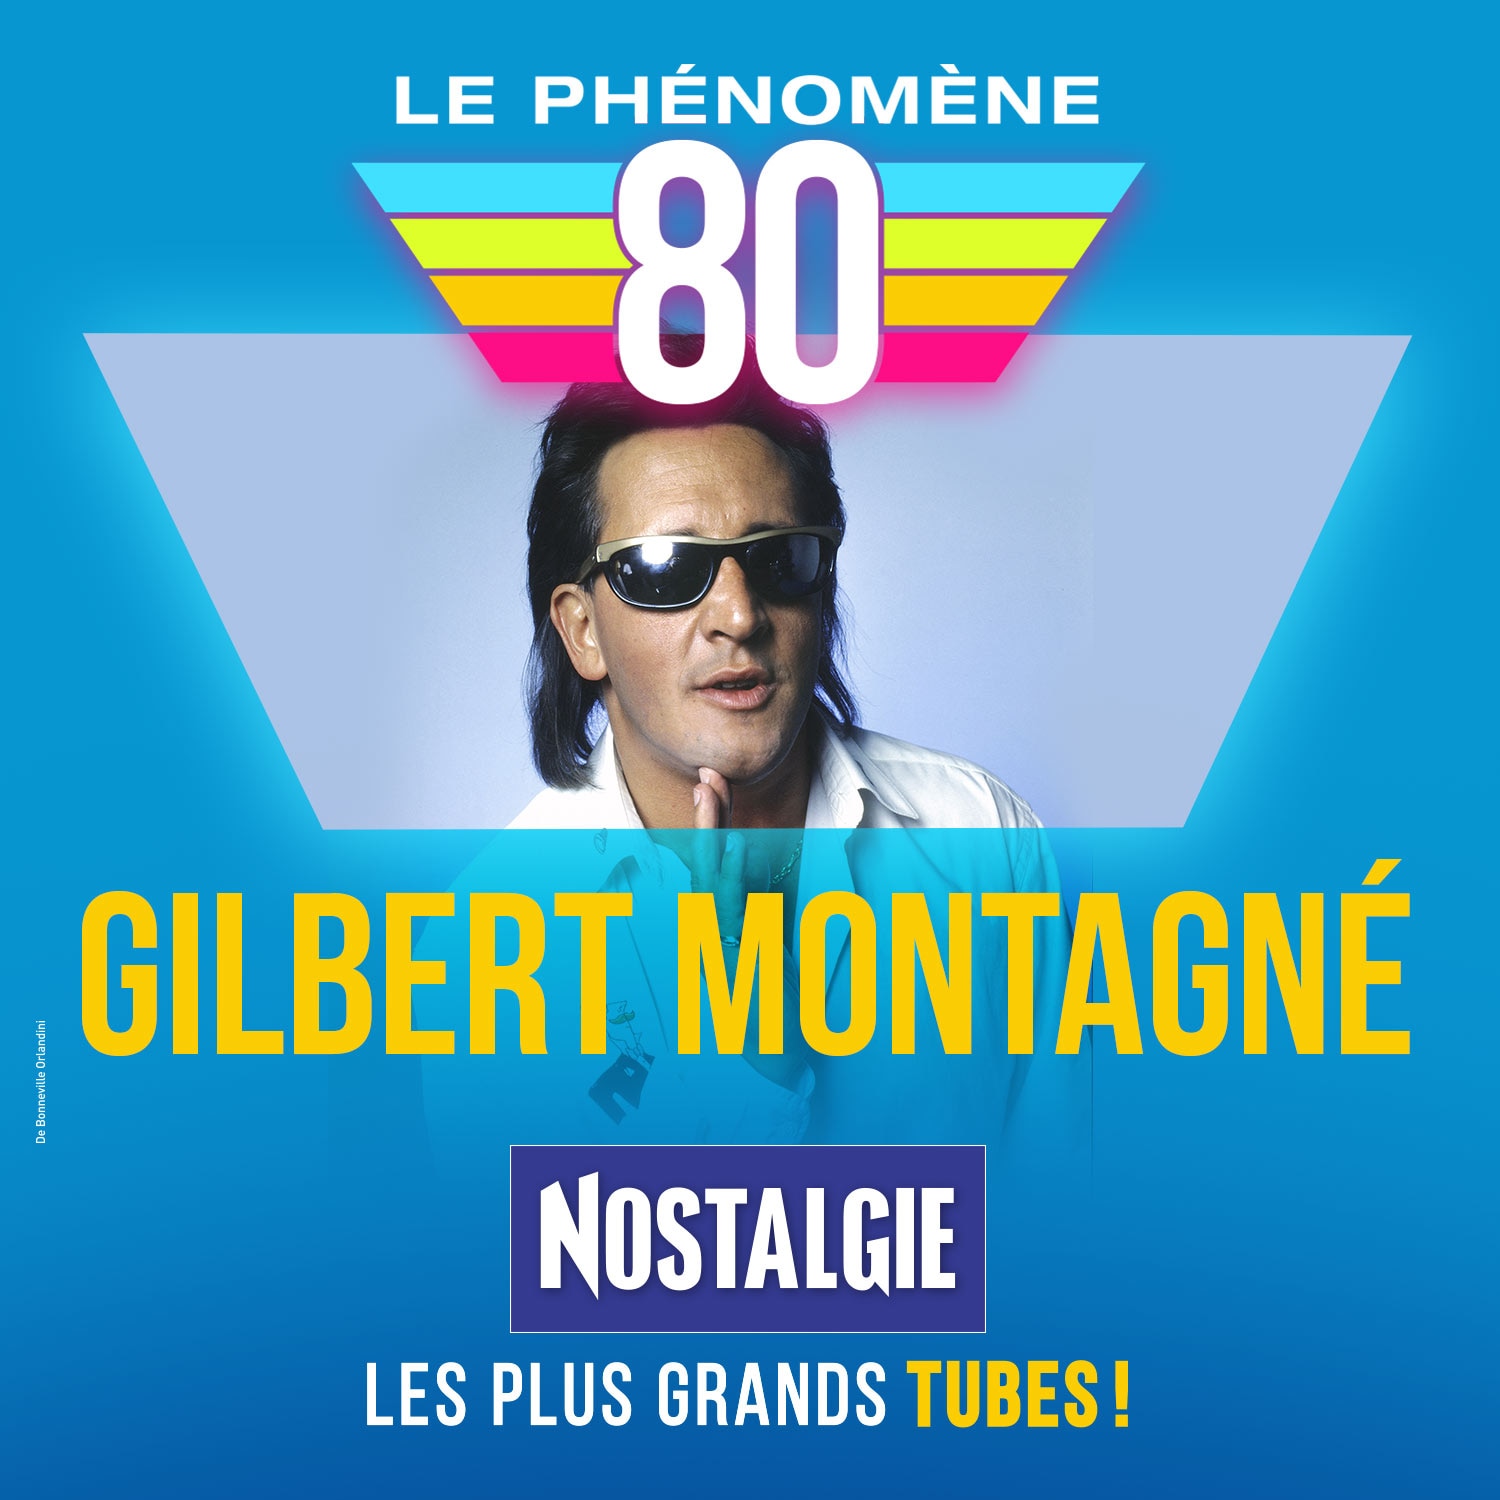 Le phénomène 80... Gilbert Montagné